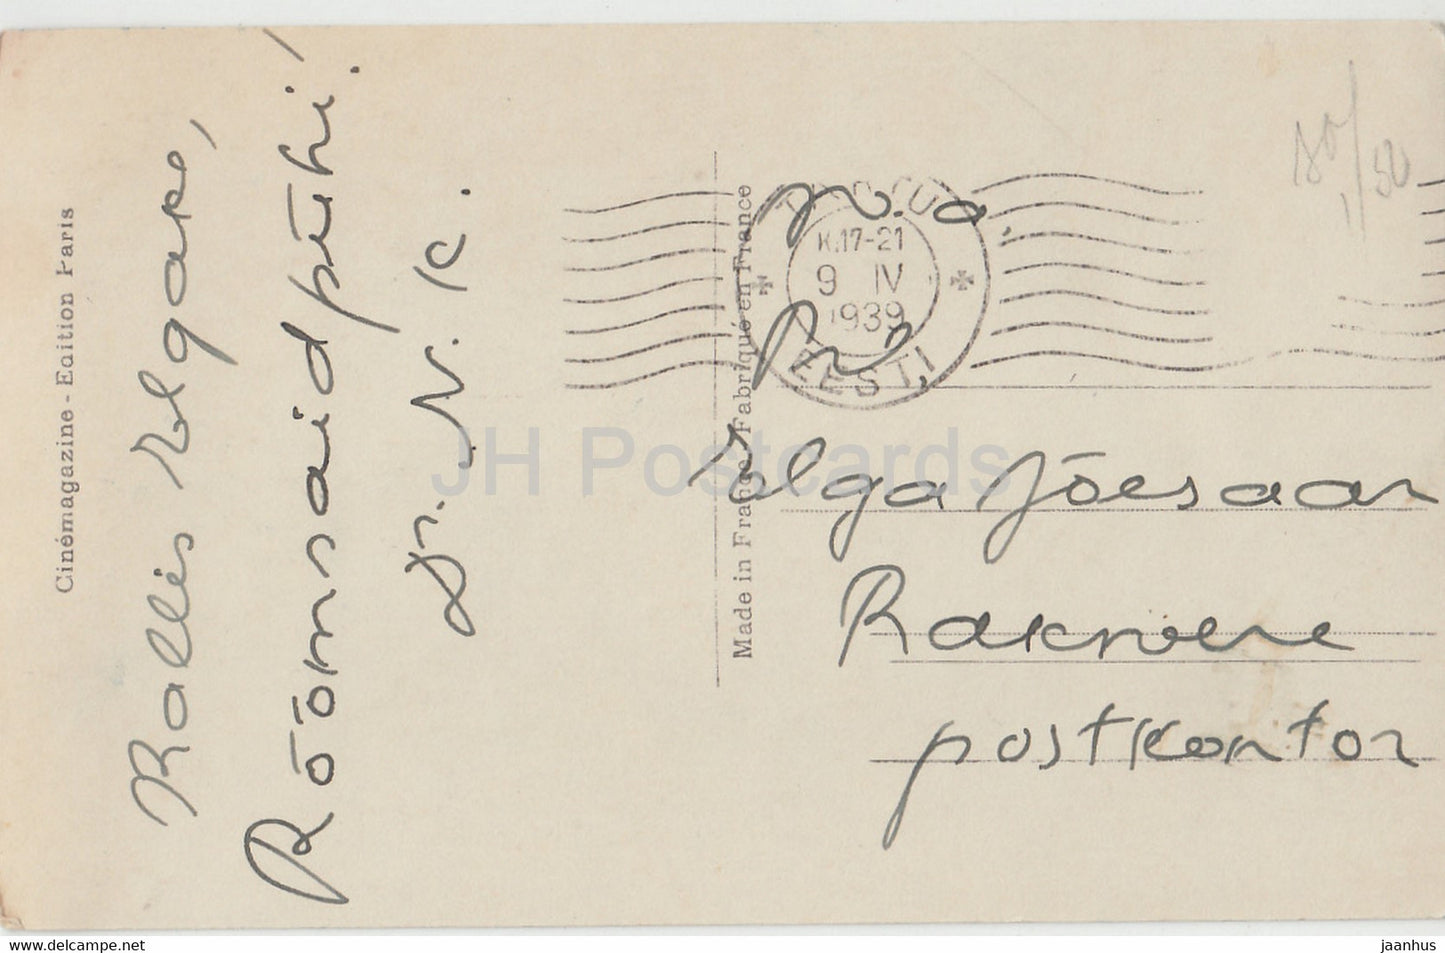 Actrice allemande Lil Dagover - Film - Film - 207 - 1939 - France - carte postale ancienne - utilisé